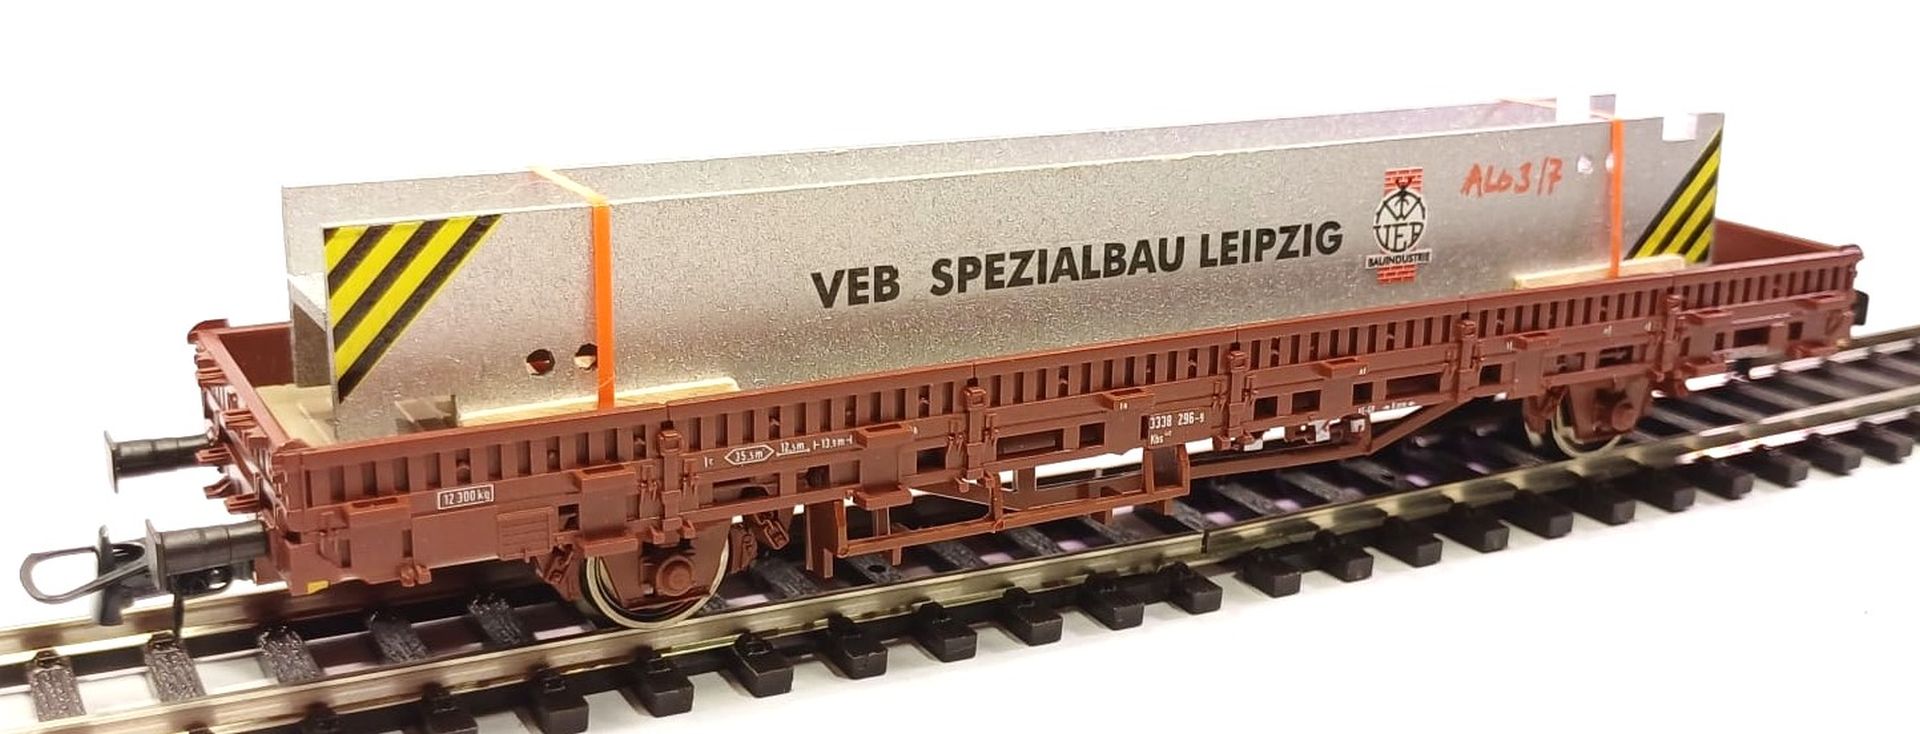 Loewe 2390 - Ladegut Maschinenbauteil 'VEB Spezialbau Leipzig', 130 mm